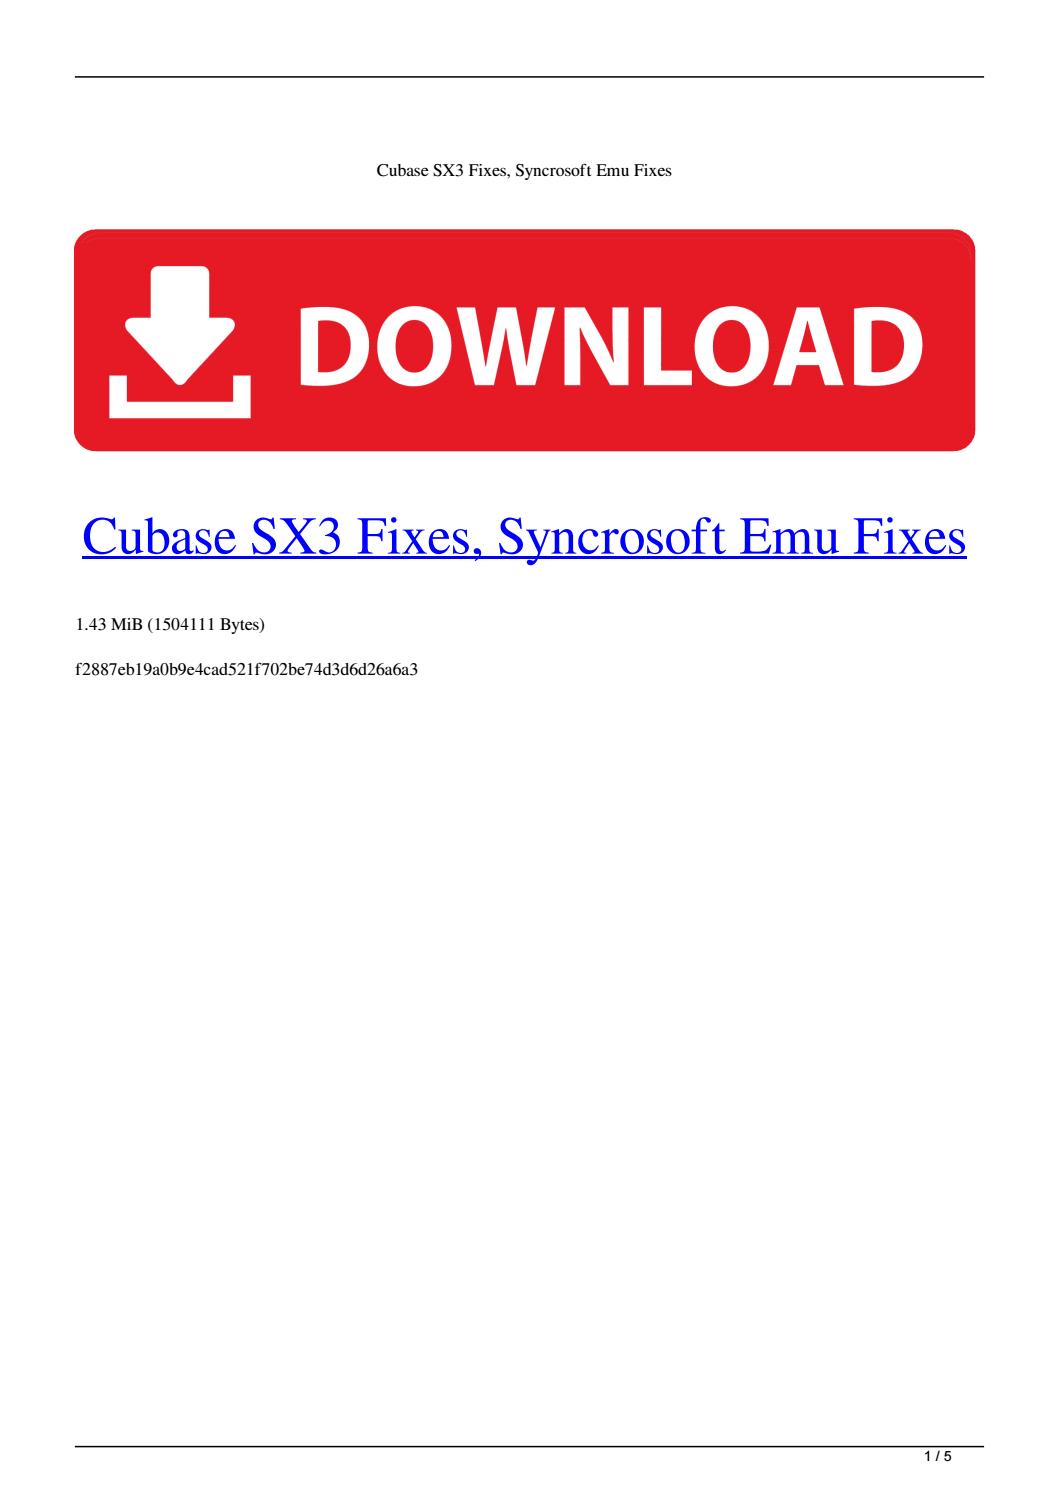 Syncrosoft Emu H2o Download